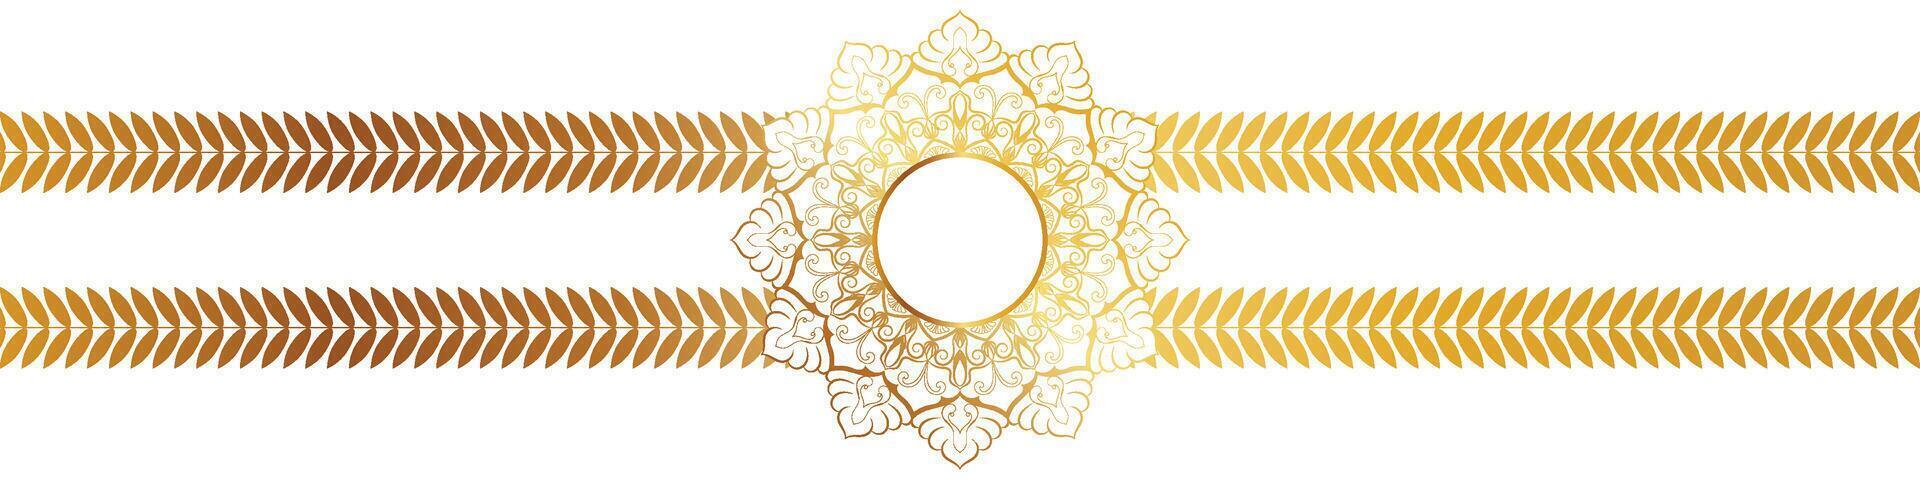 circulo dorado mandala modelo para decorando casado Pareja Boda tarjetas vector